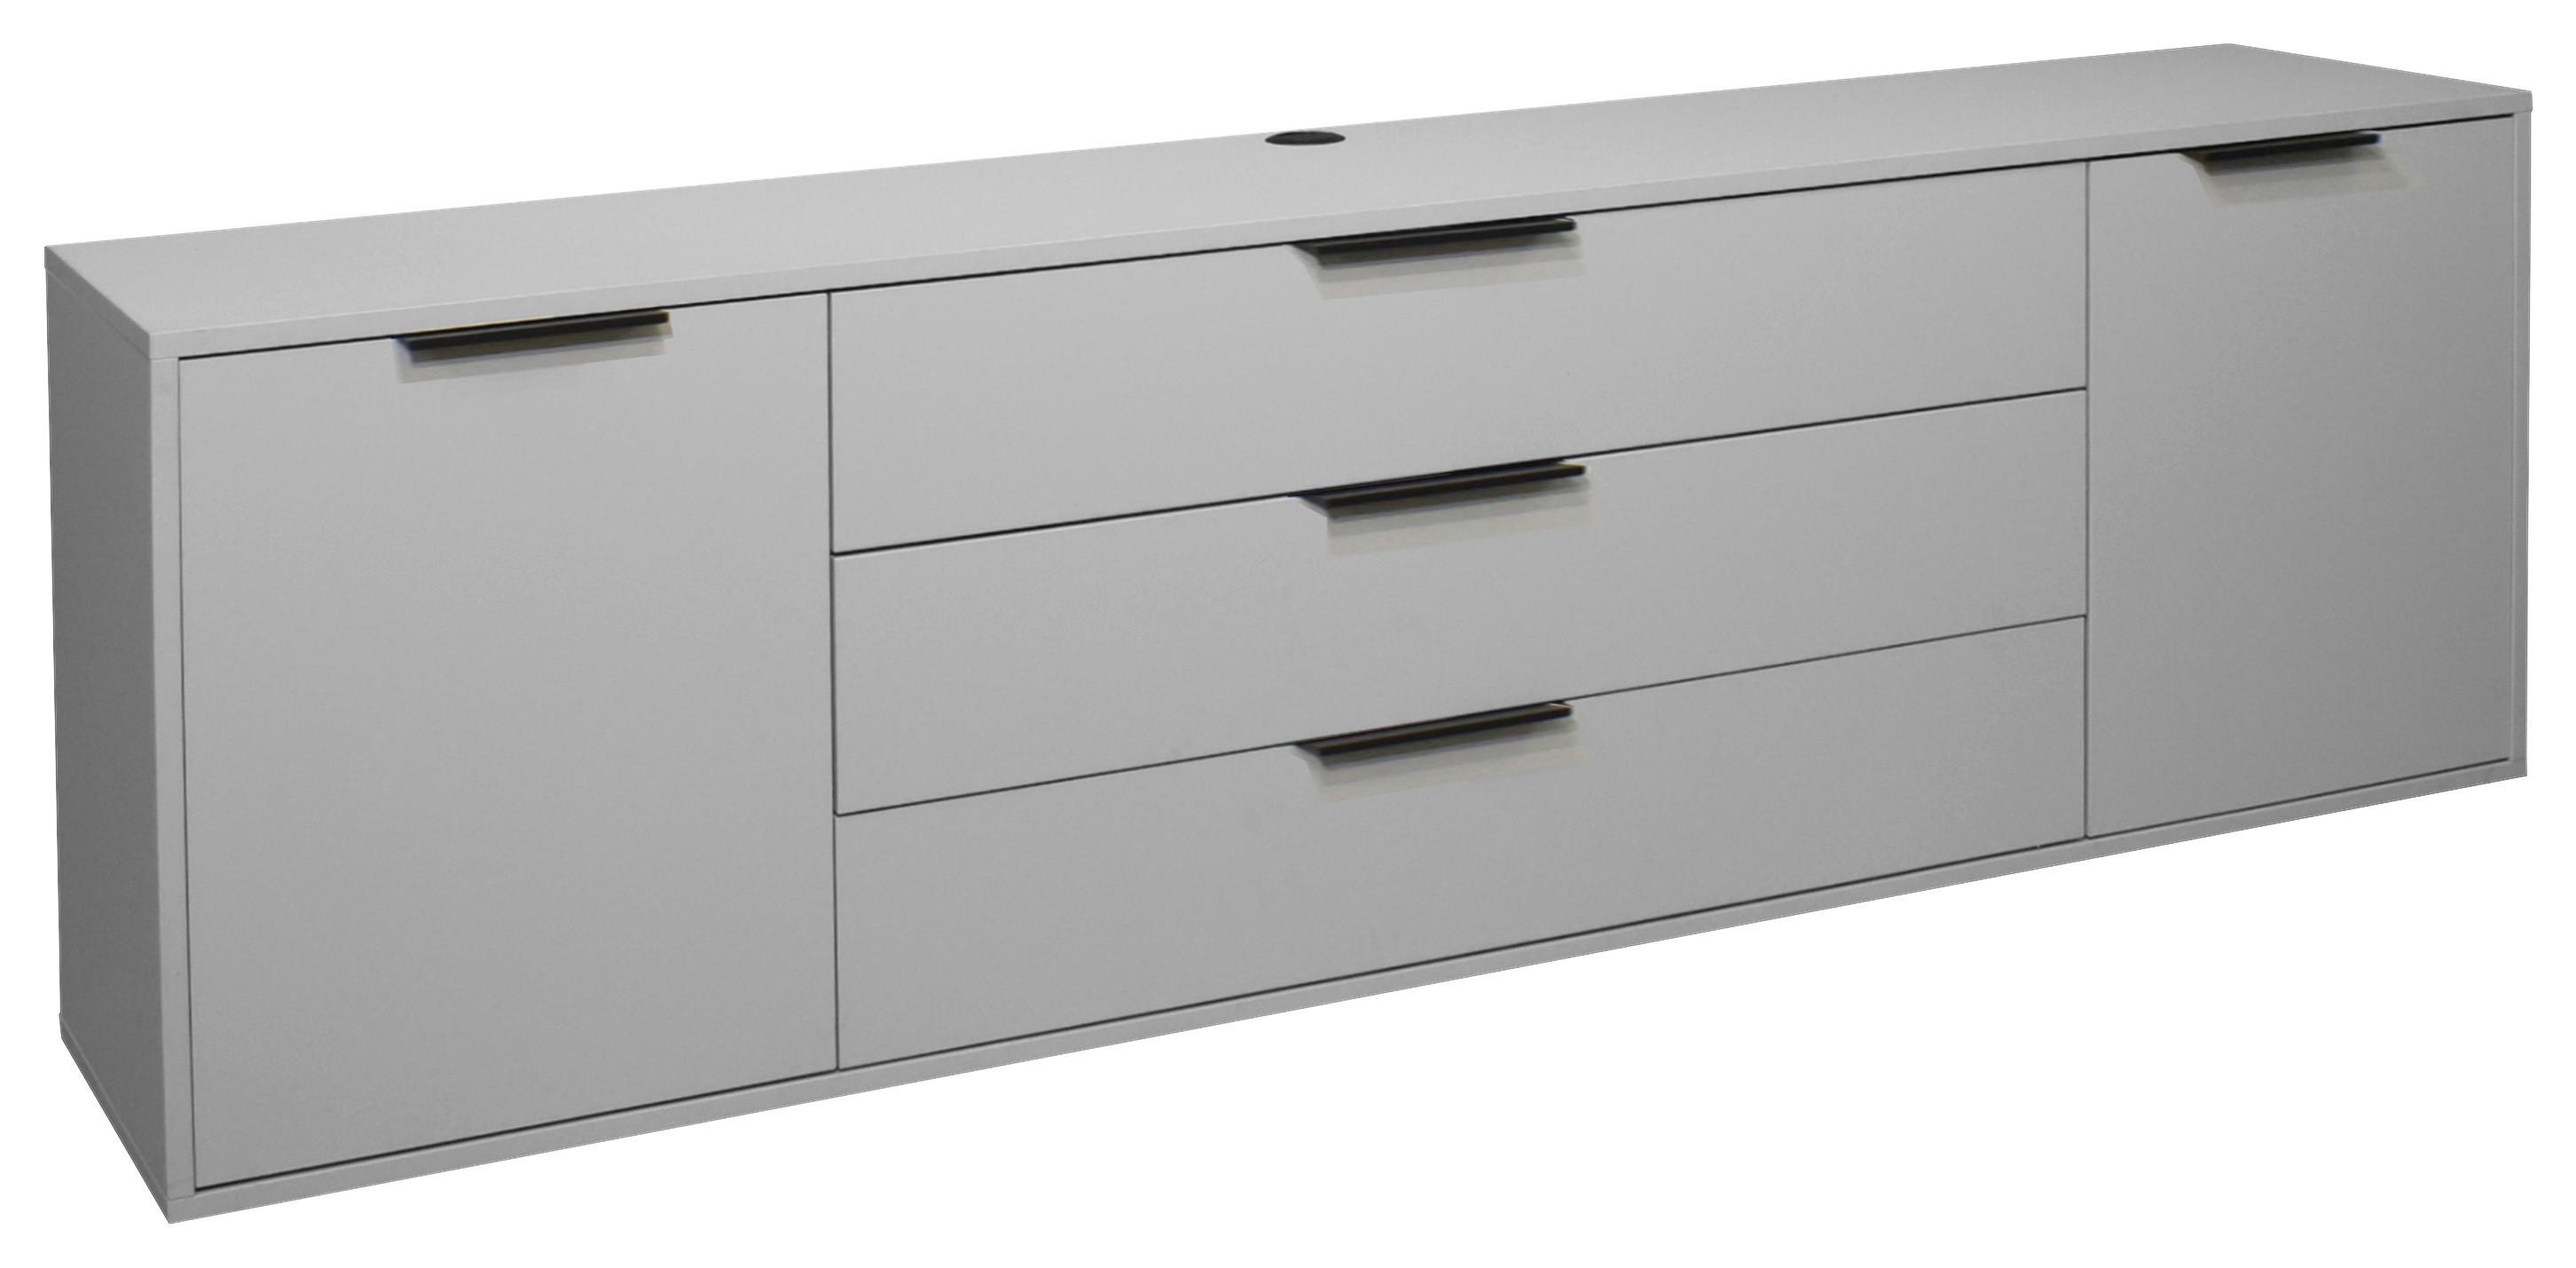 Lowboard in Grau - Grau, Modern (216/67/45cm) - Premium Living